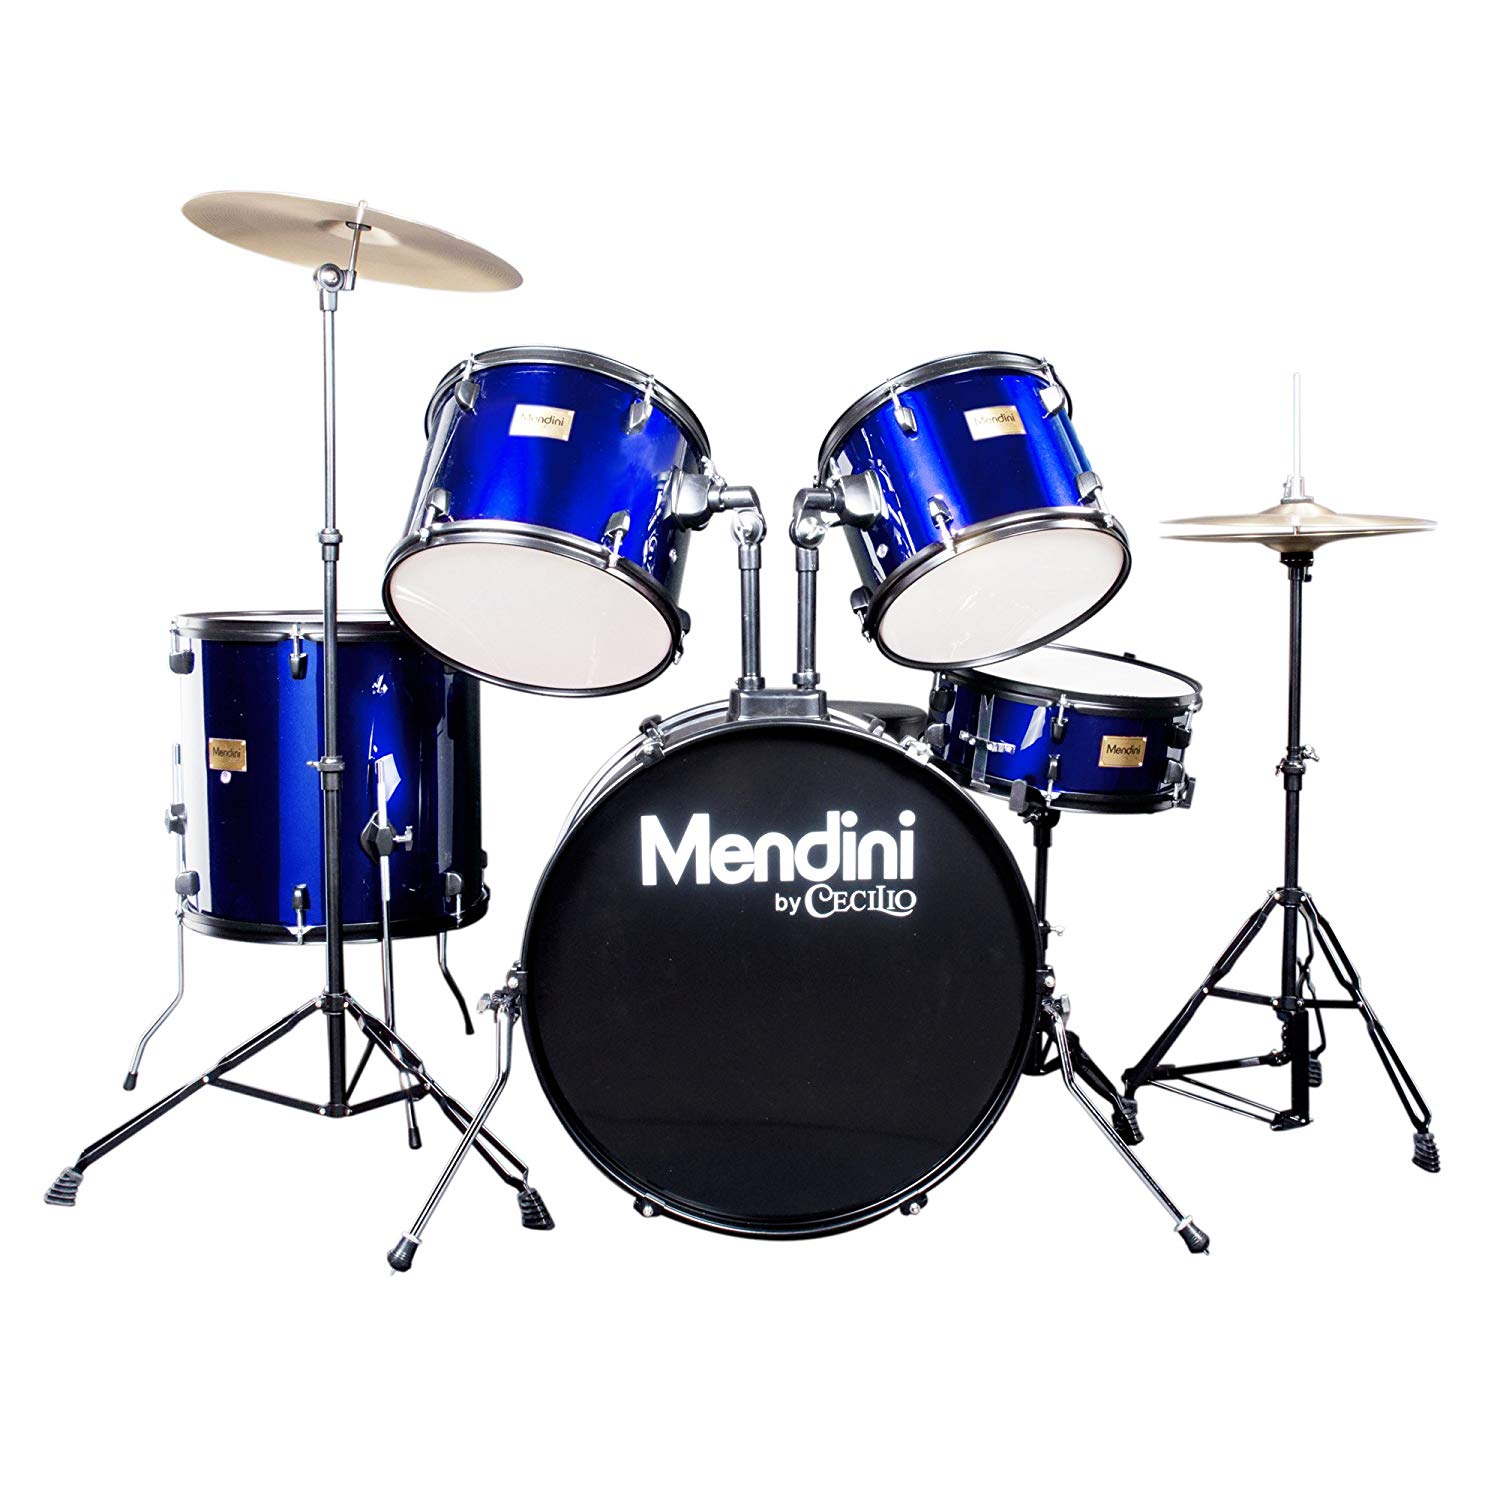 Amazon.com: Mendini by Cecilio Complete Full Size 5-Piece Adult Drum ...